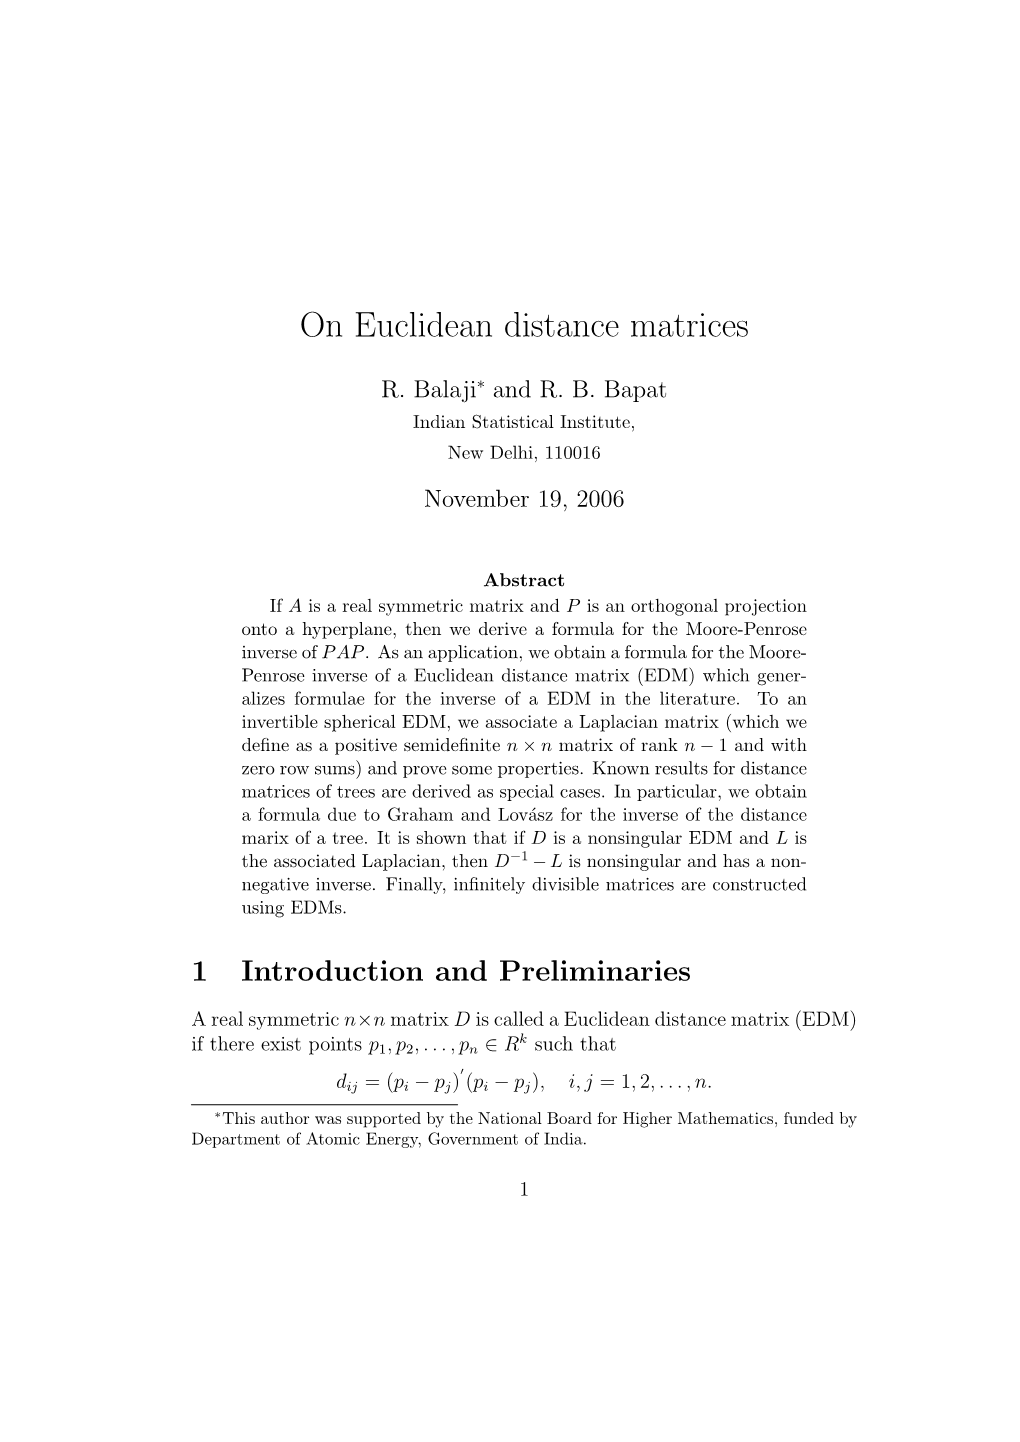 On Euclidean Distance Matrices